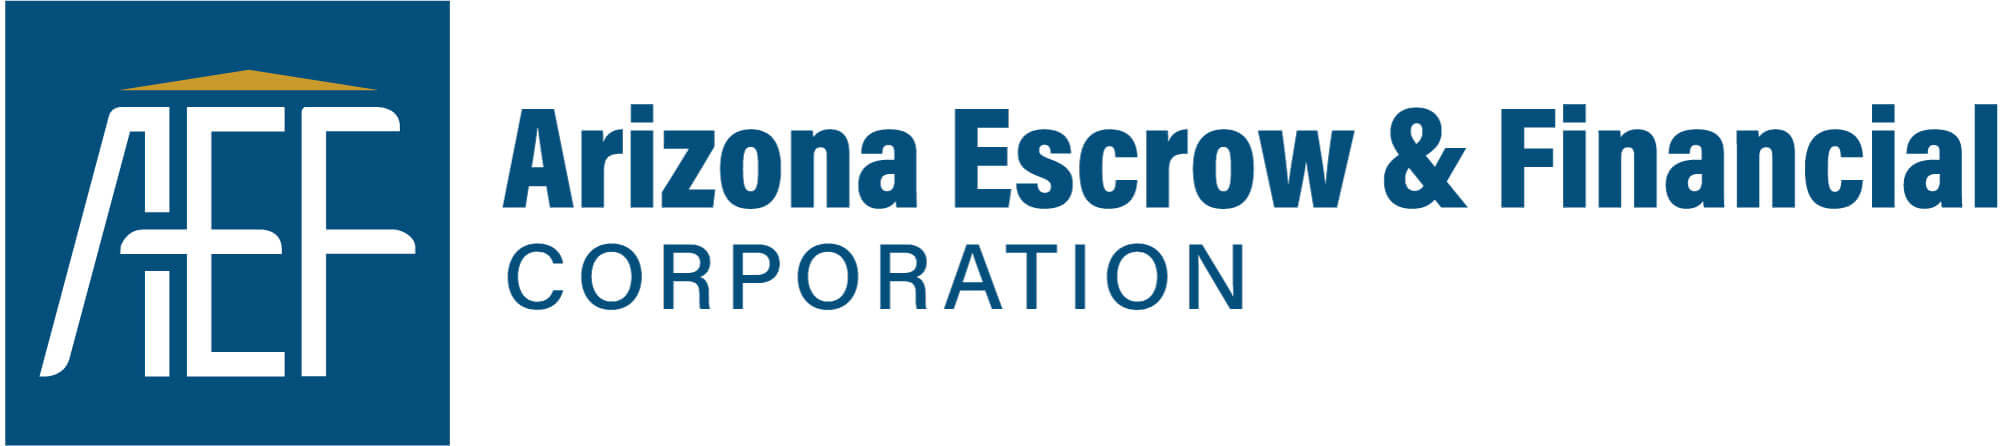 arizona escrow & financial corporation branding